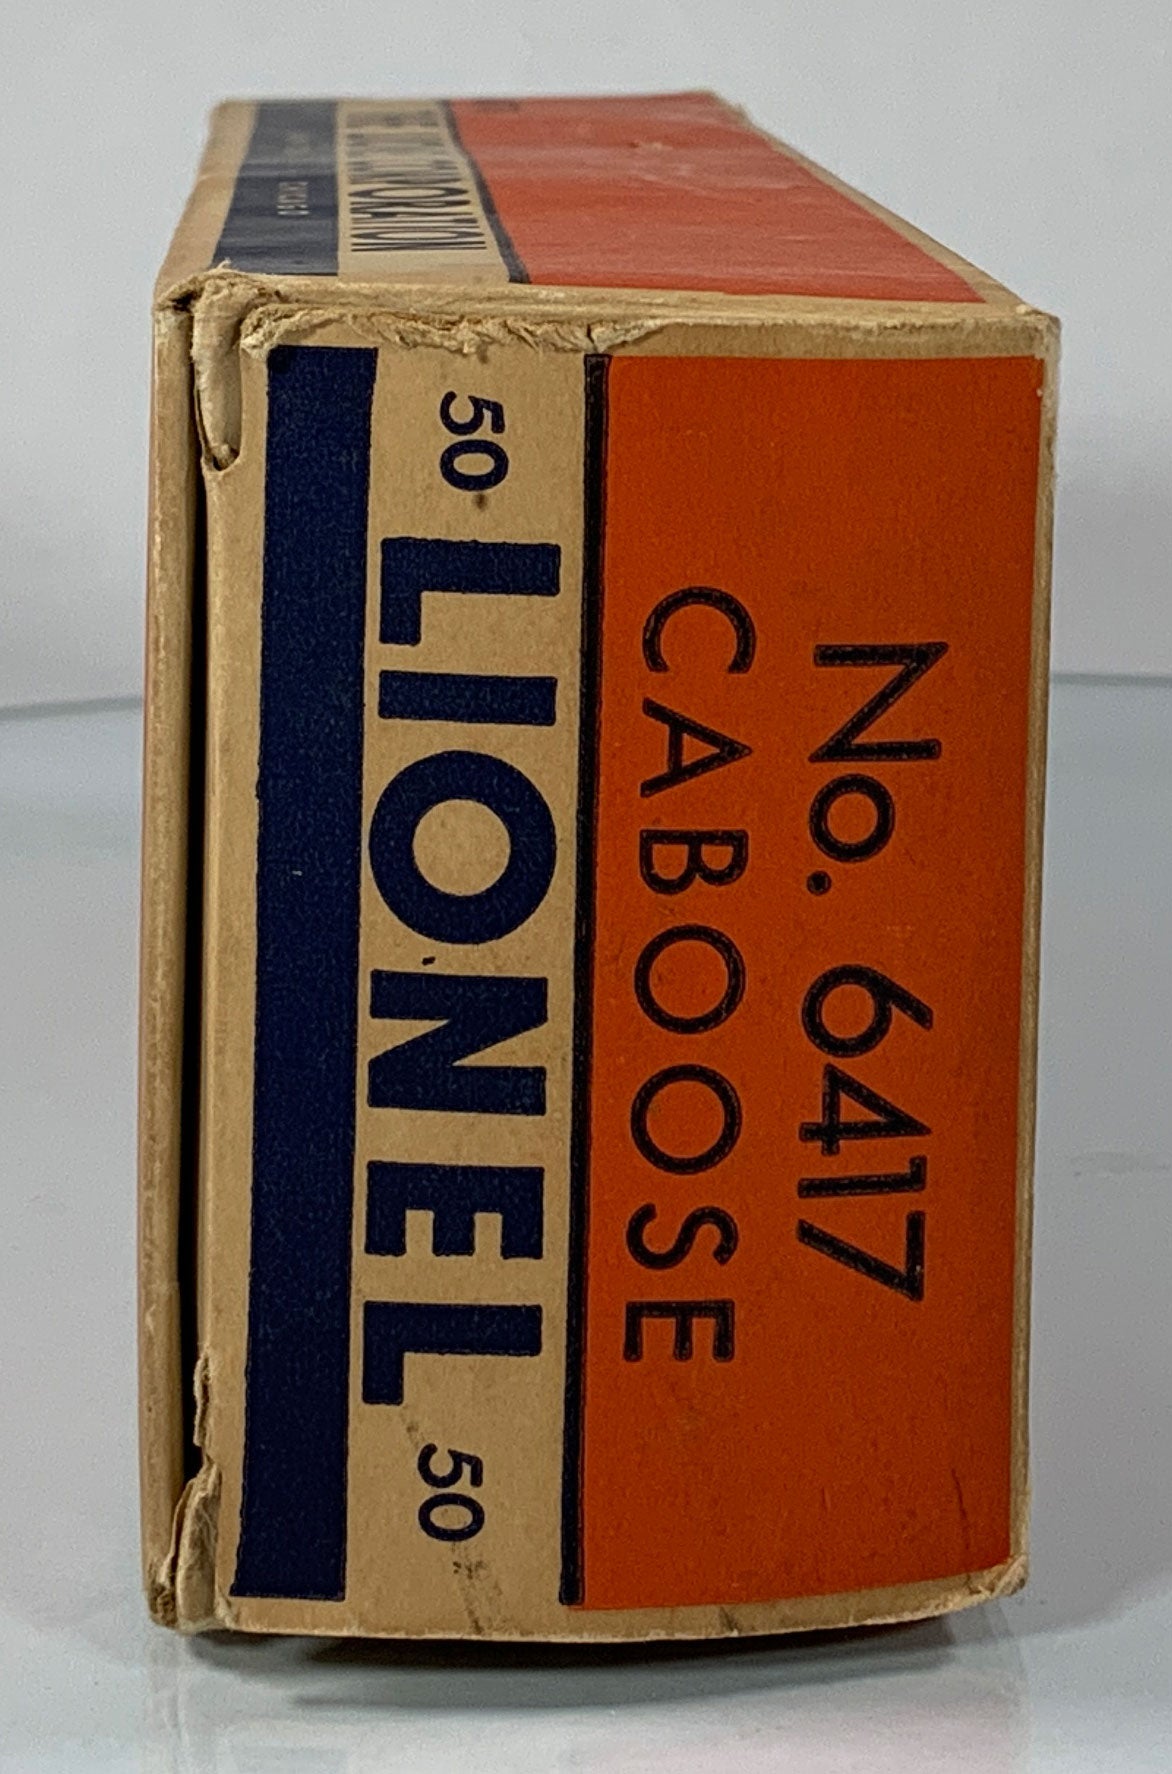 LIONEL • O GAUGE • 1954 Postwar 6417-50 Illuminated Lehigh Valley Caboose • Original Box • EXCELLENT COND